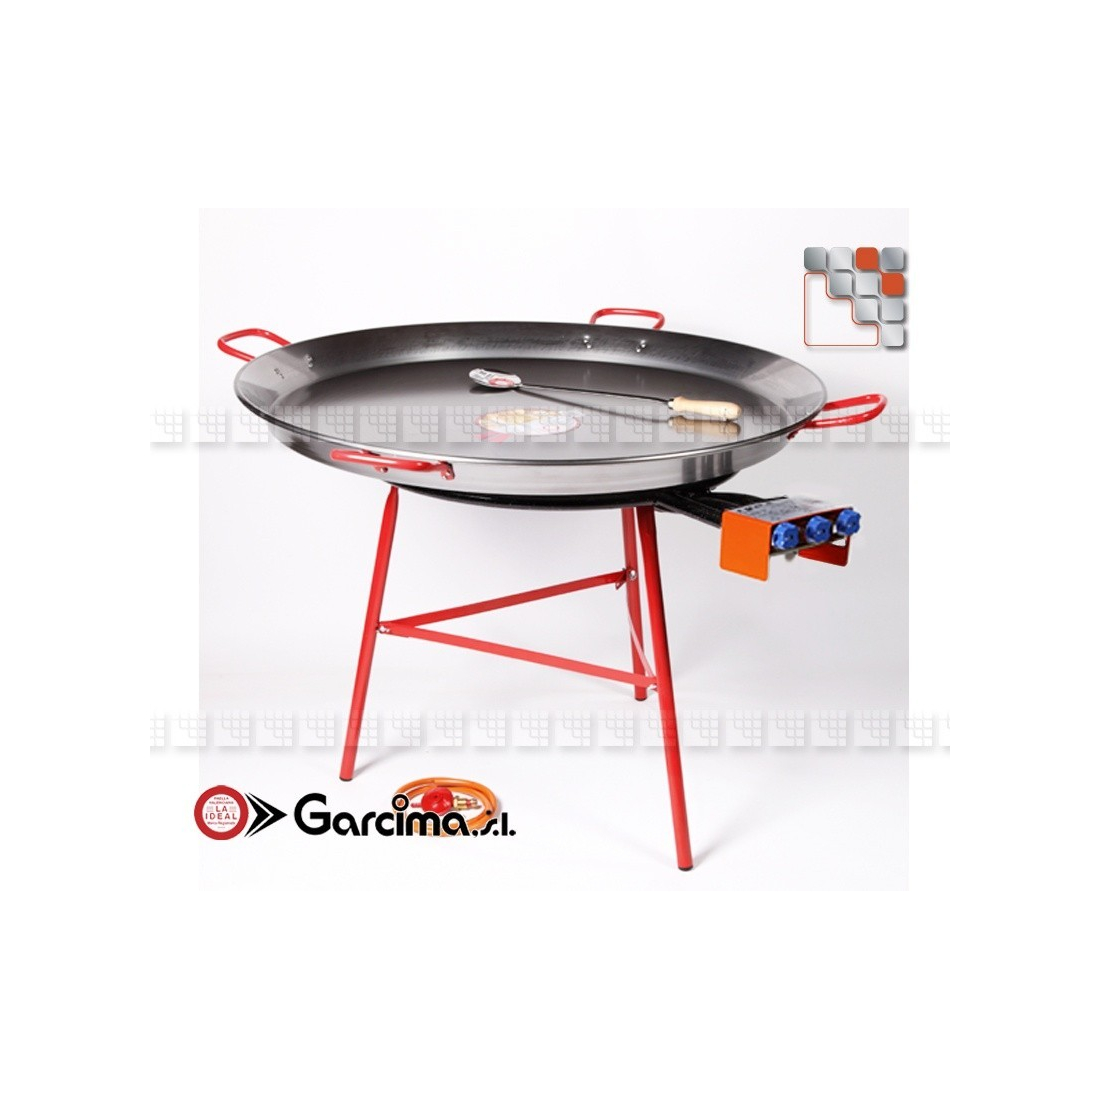 Garcima 100D Polished Steel Paella Kit G05-K10019 GARCIMA® LaIdeal Garcima Paella Flat Kit